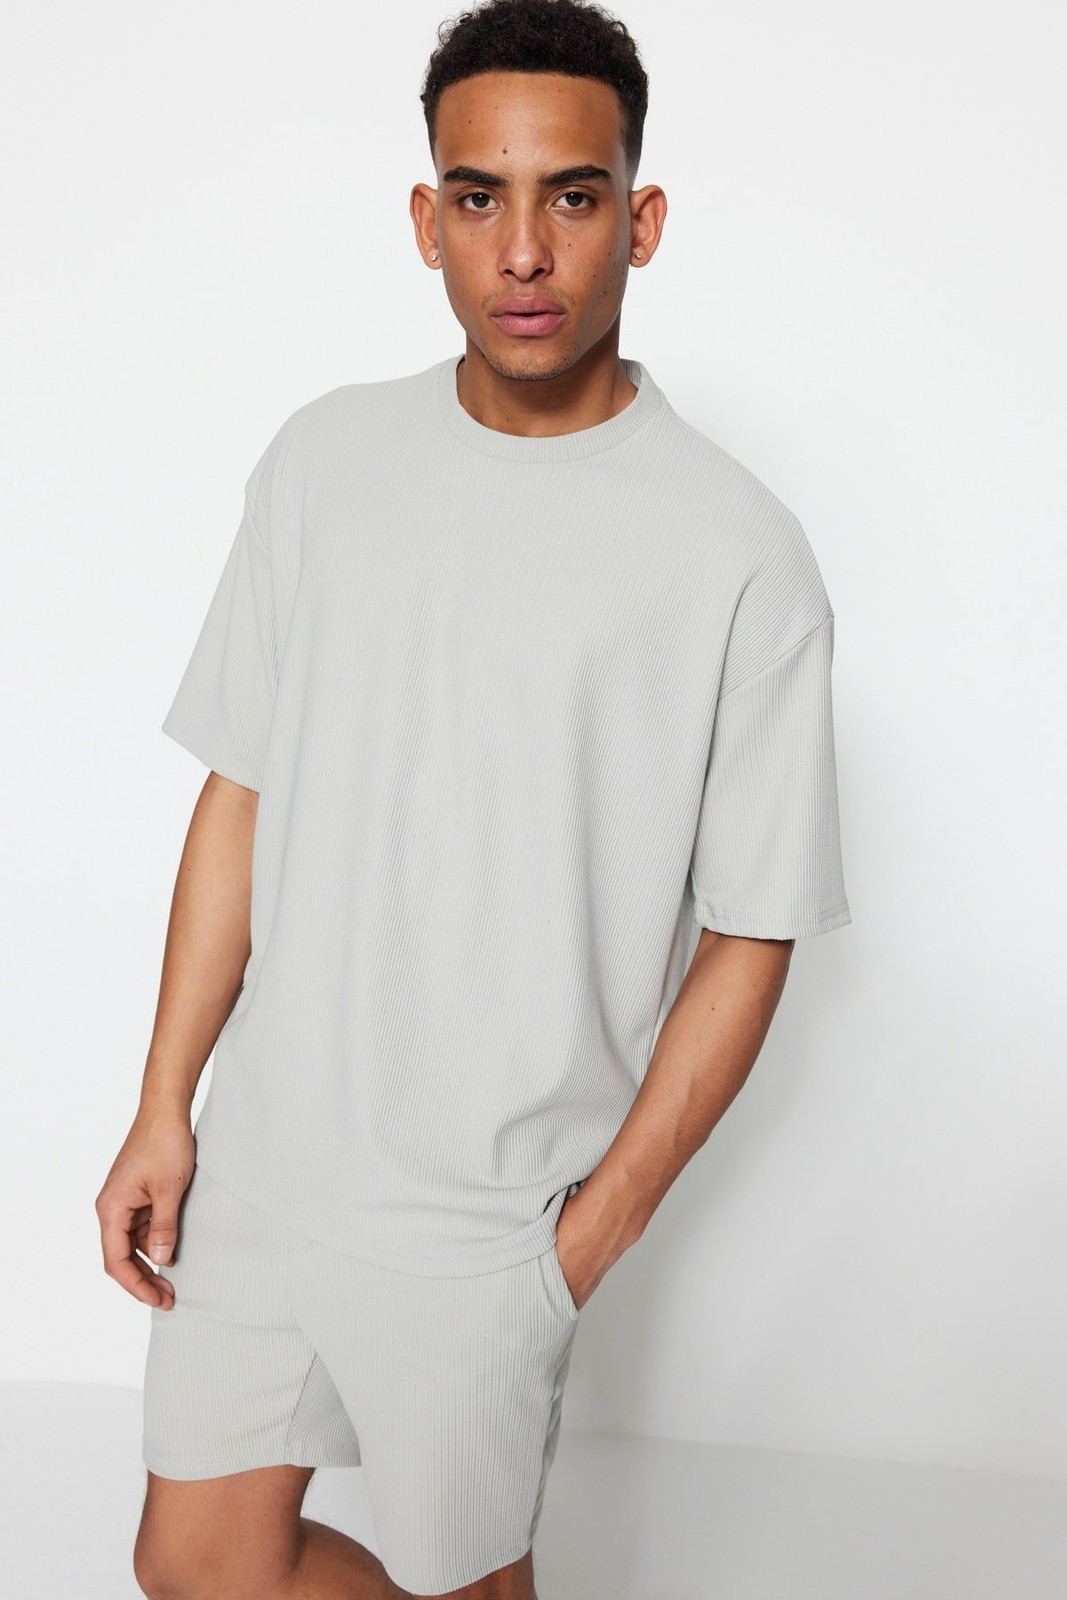 Trendyol Limited Edition Gray Men's Oversize Crew Neck Short Sleeve Textured Ottoman T-Shirt